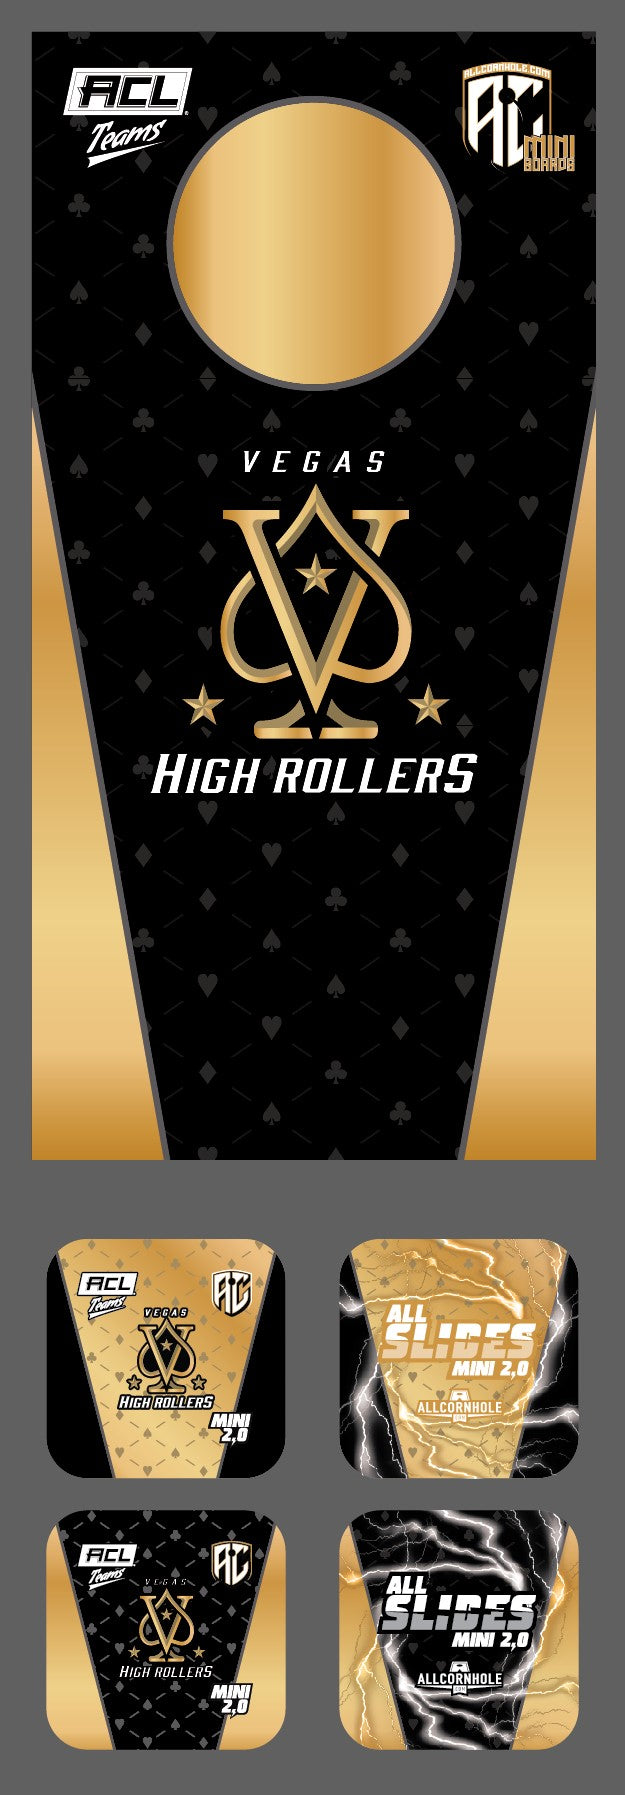 ACL Teams mini Cornhole Board Set - Vegas High Rollers